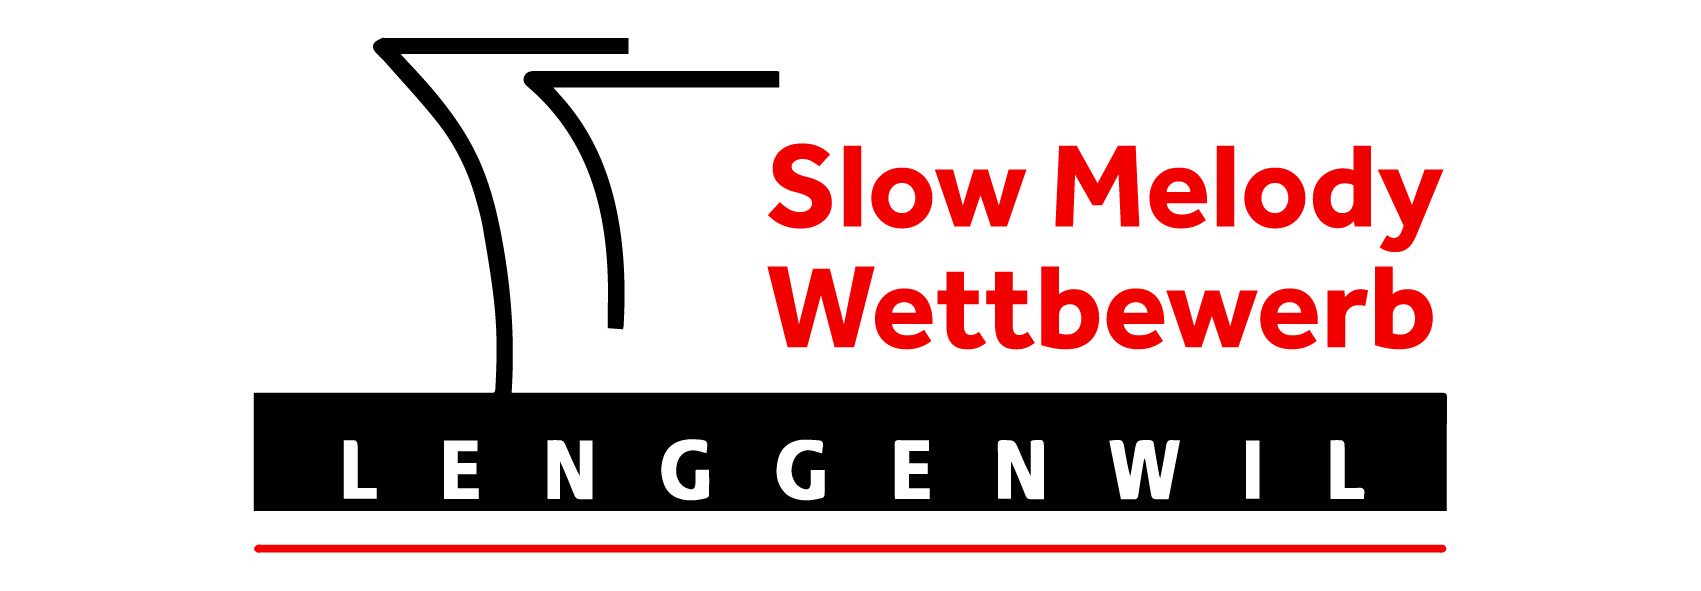 Slow Melody Wettbewerb